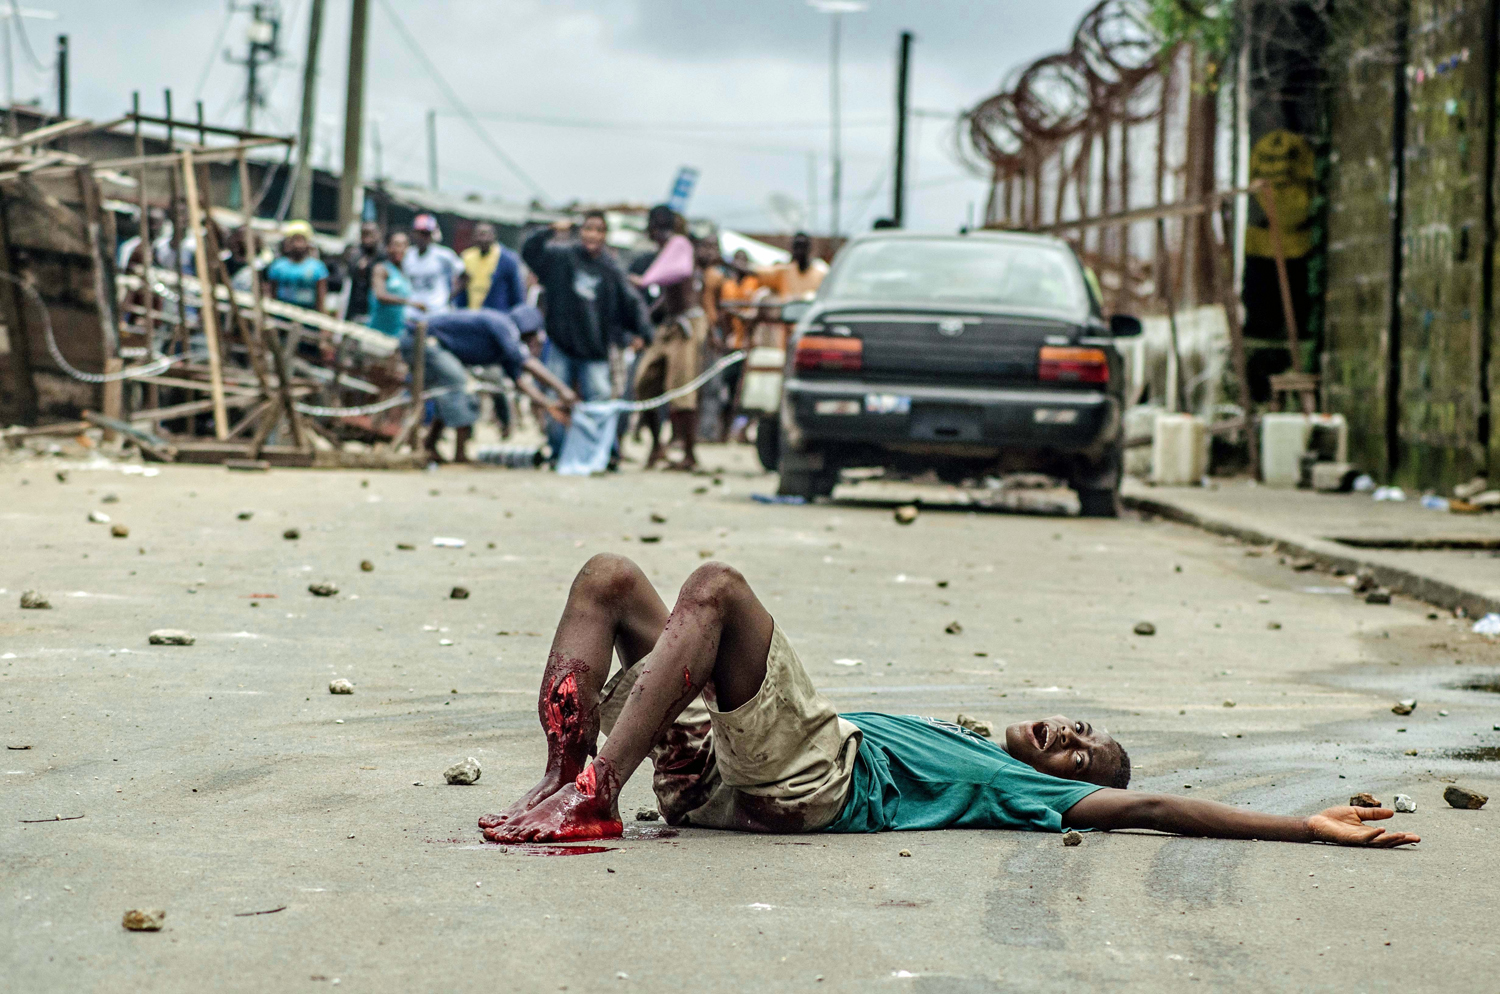 Tommy Trenchard, Aug. 20, 2014. Monrovia, Liberia.